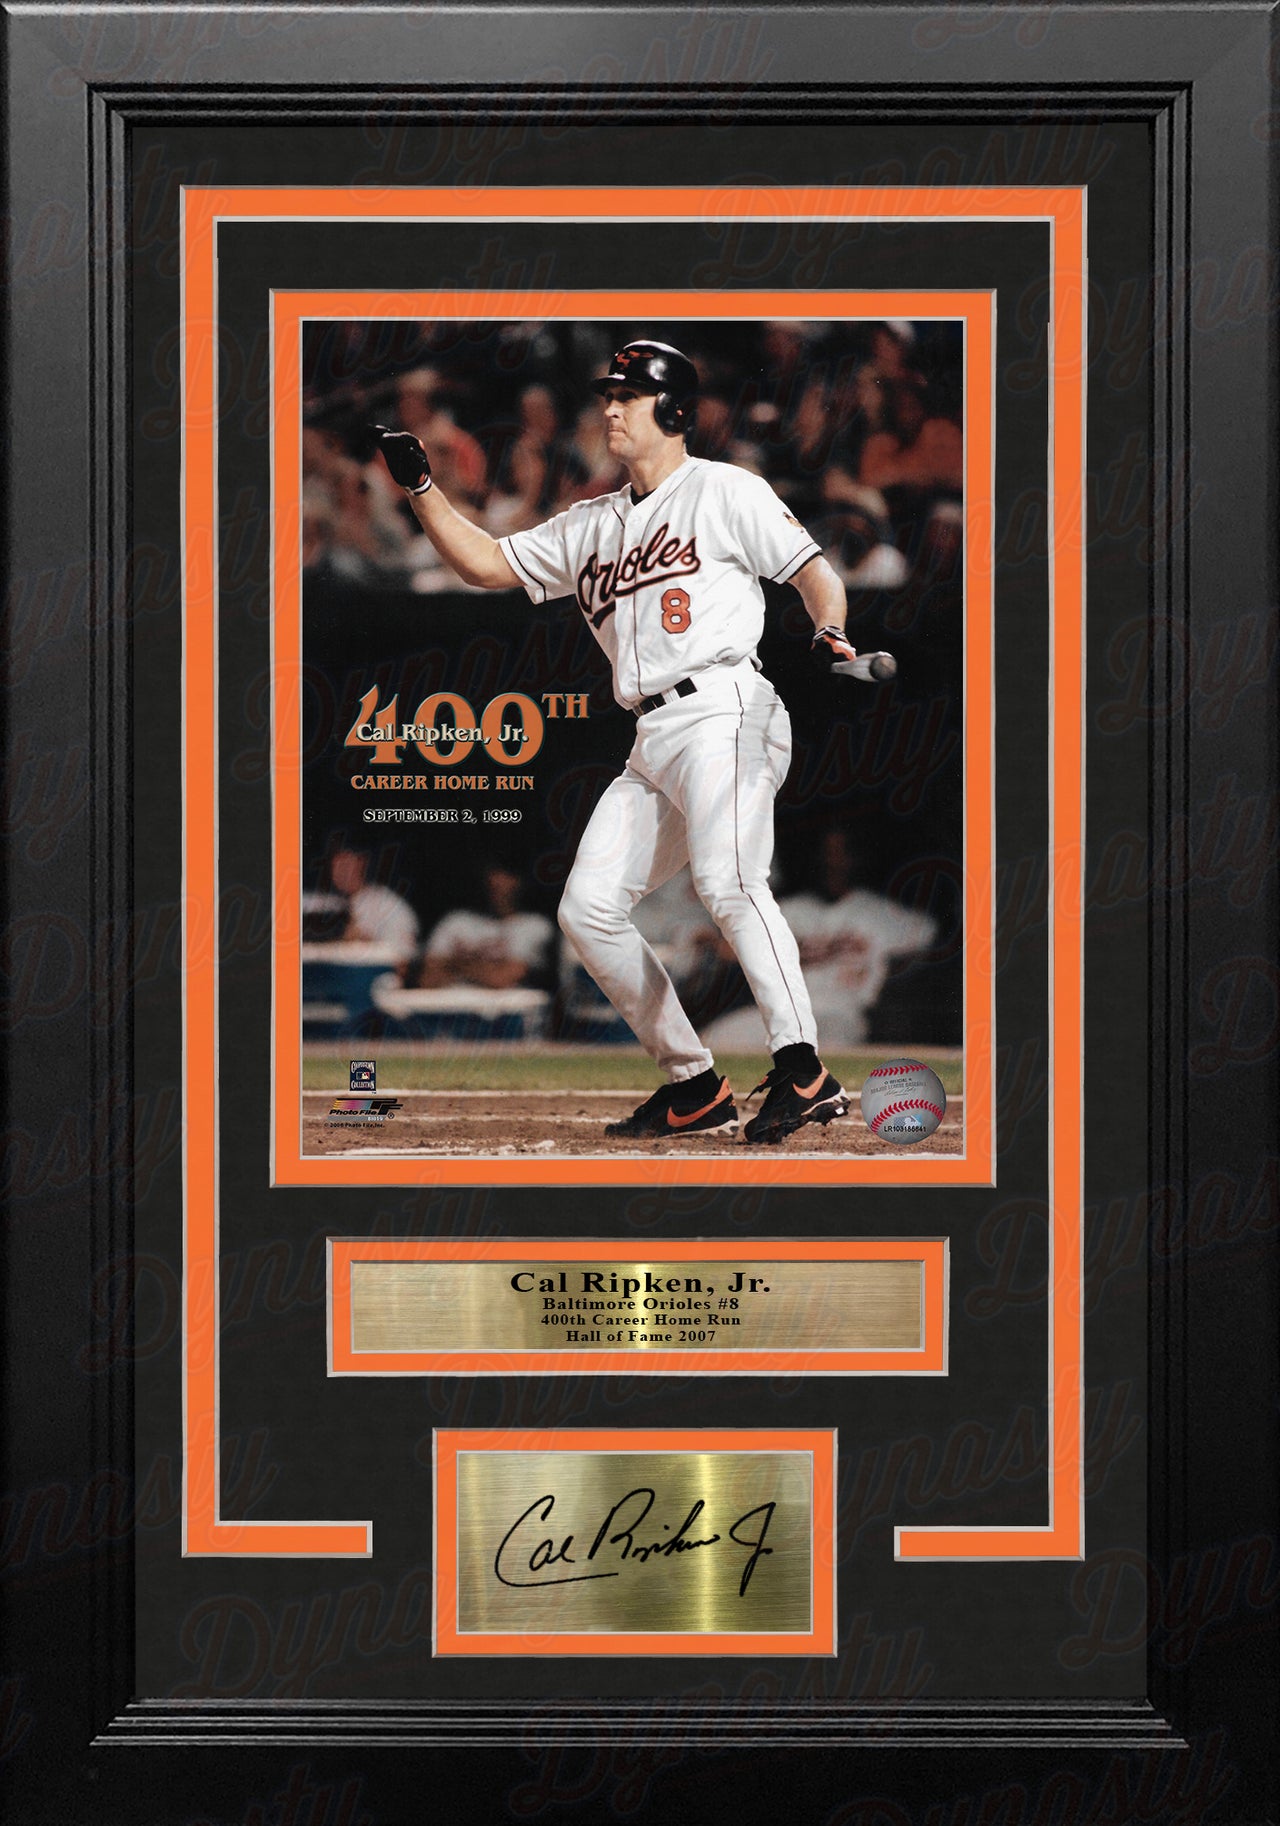 Cal Ripken, Jr. 400th Home Run Baltimore Orioles 8" x 10" Framed Baseball Photo with Engraved Autograph - Dynasty Sports & Framing 